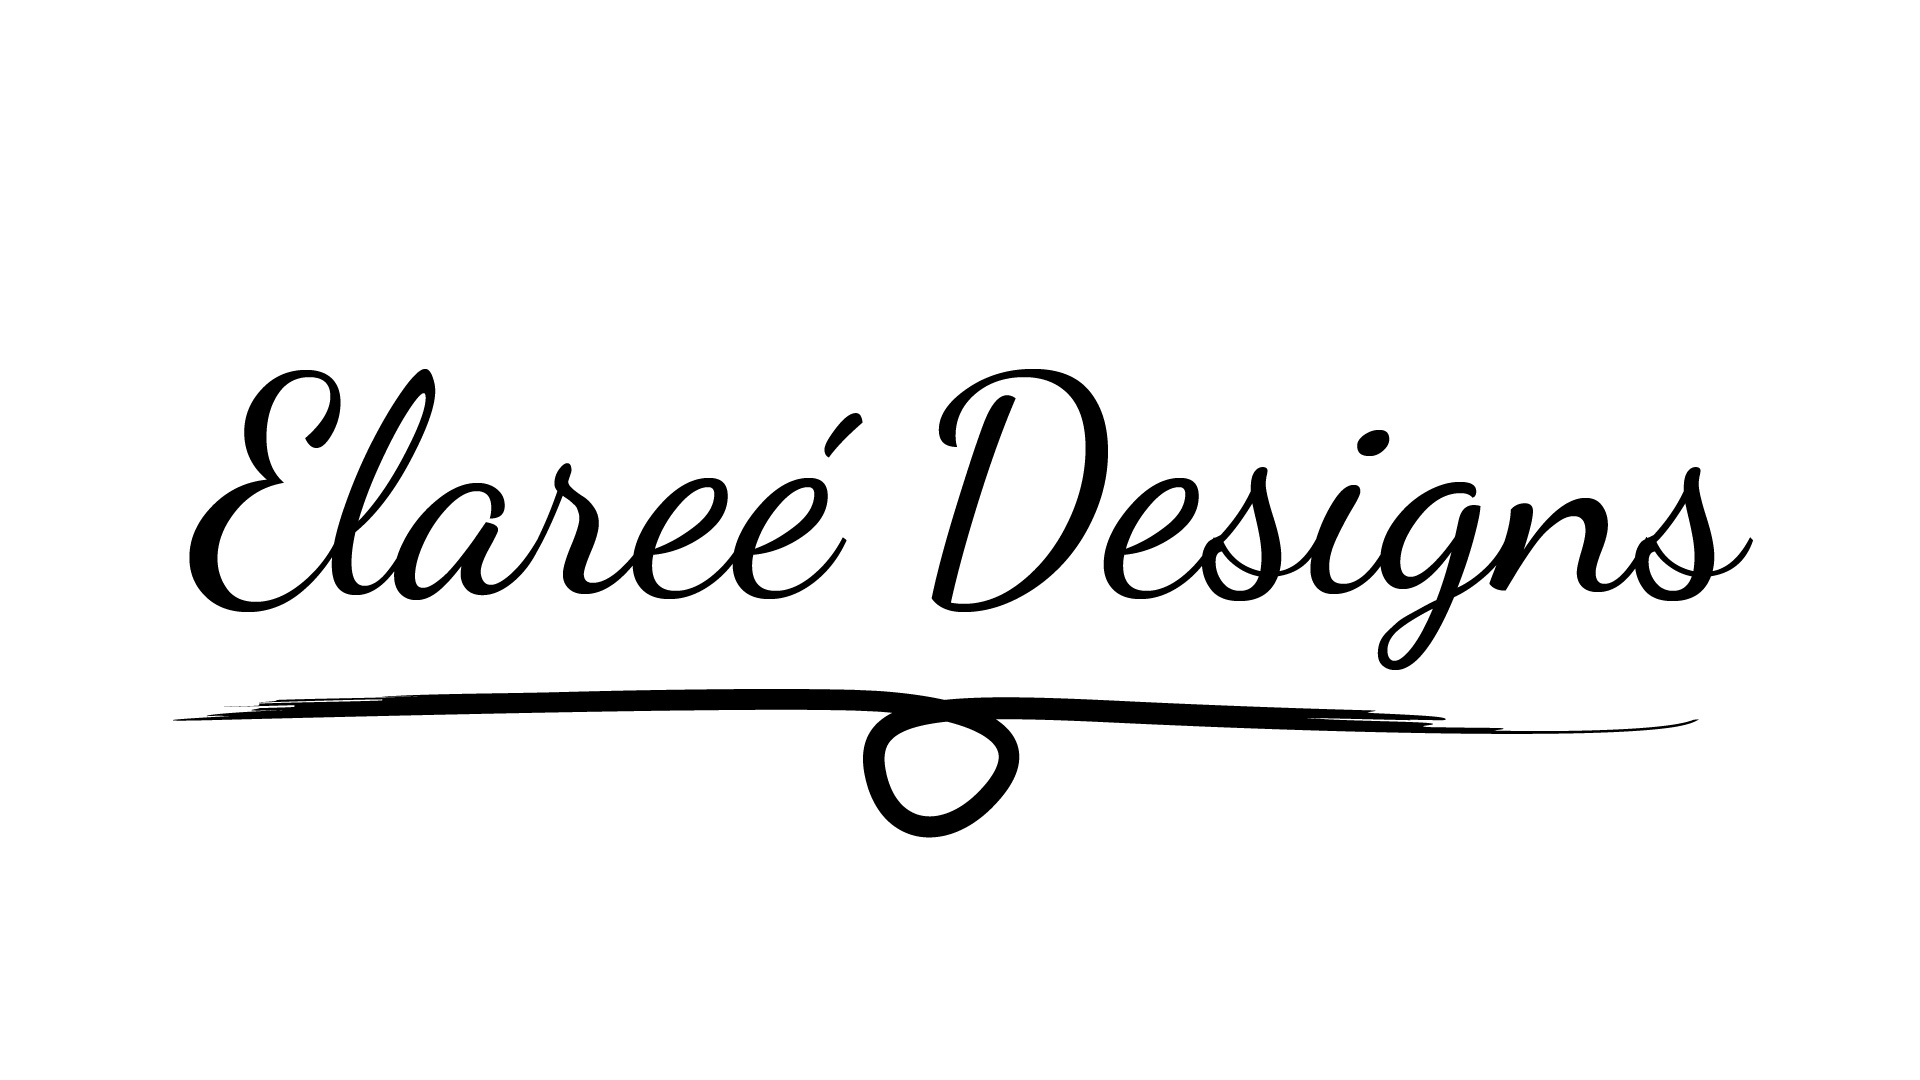 Elaree Designs logo